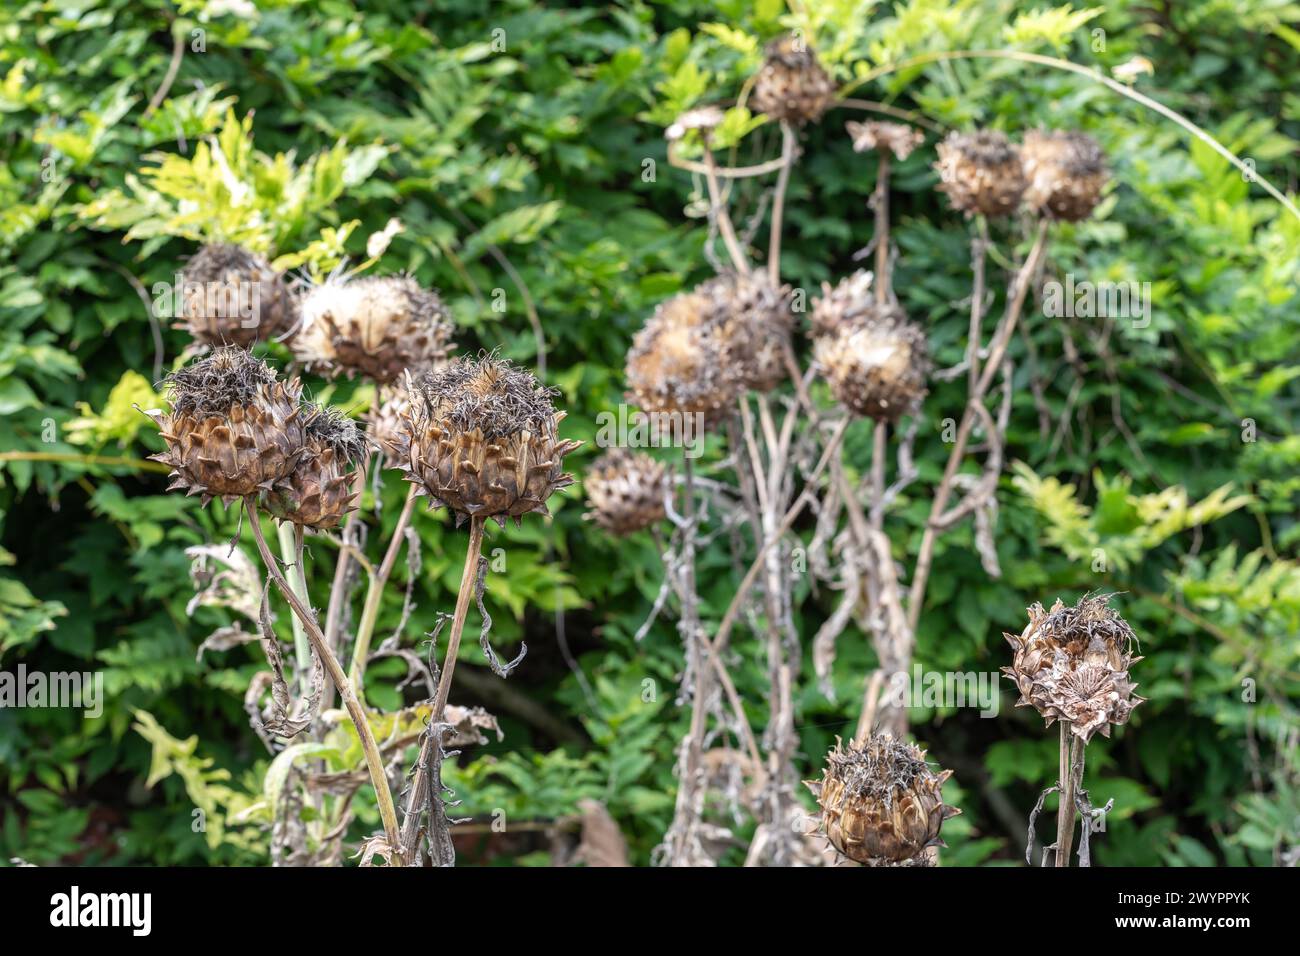 Cynara cardunculus / globe artichoke seedheads / dead flowerheads held on for autumn / winter interest Stock Photo